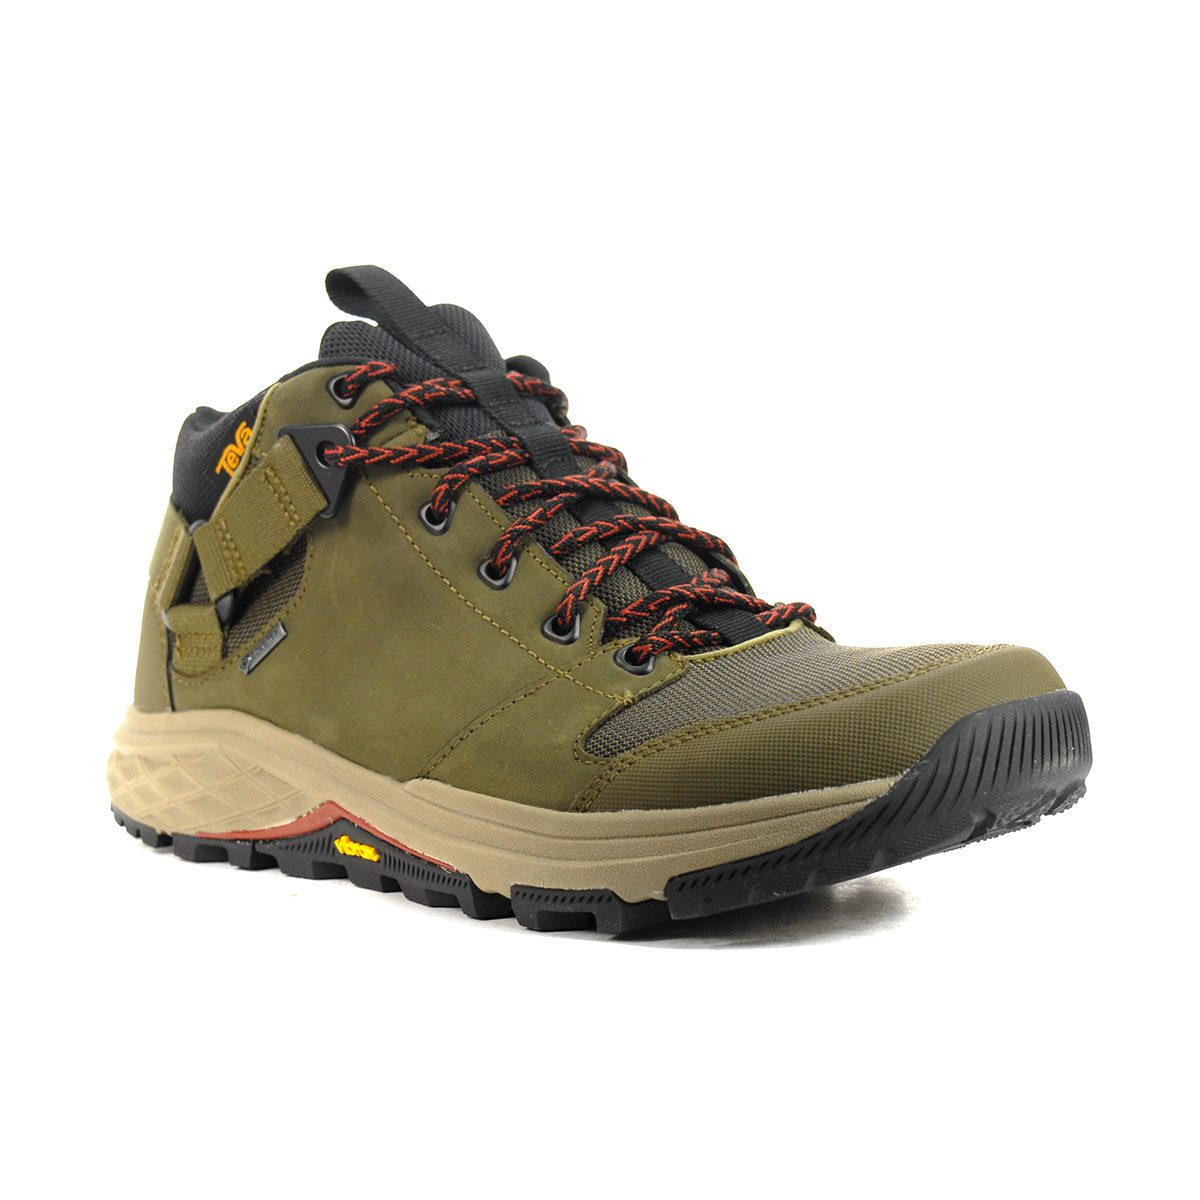 Teva Men's Grandview GTX Dark Olive Hiking Boots 1106804 - WOOKI.COM